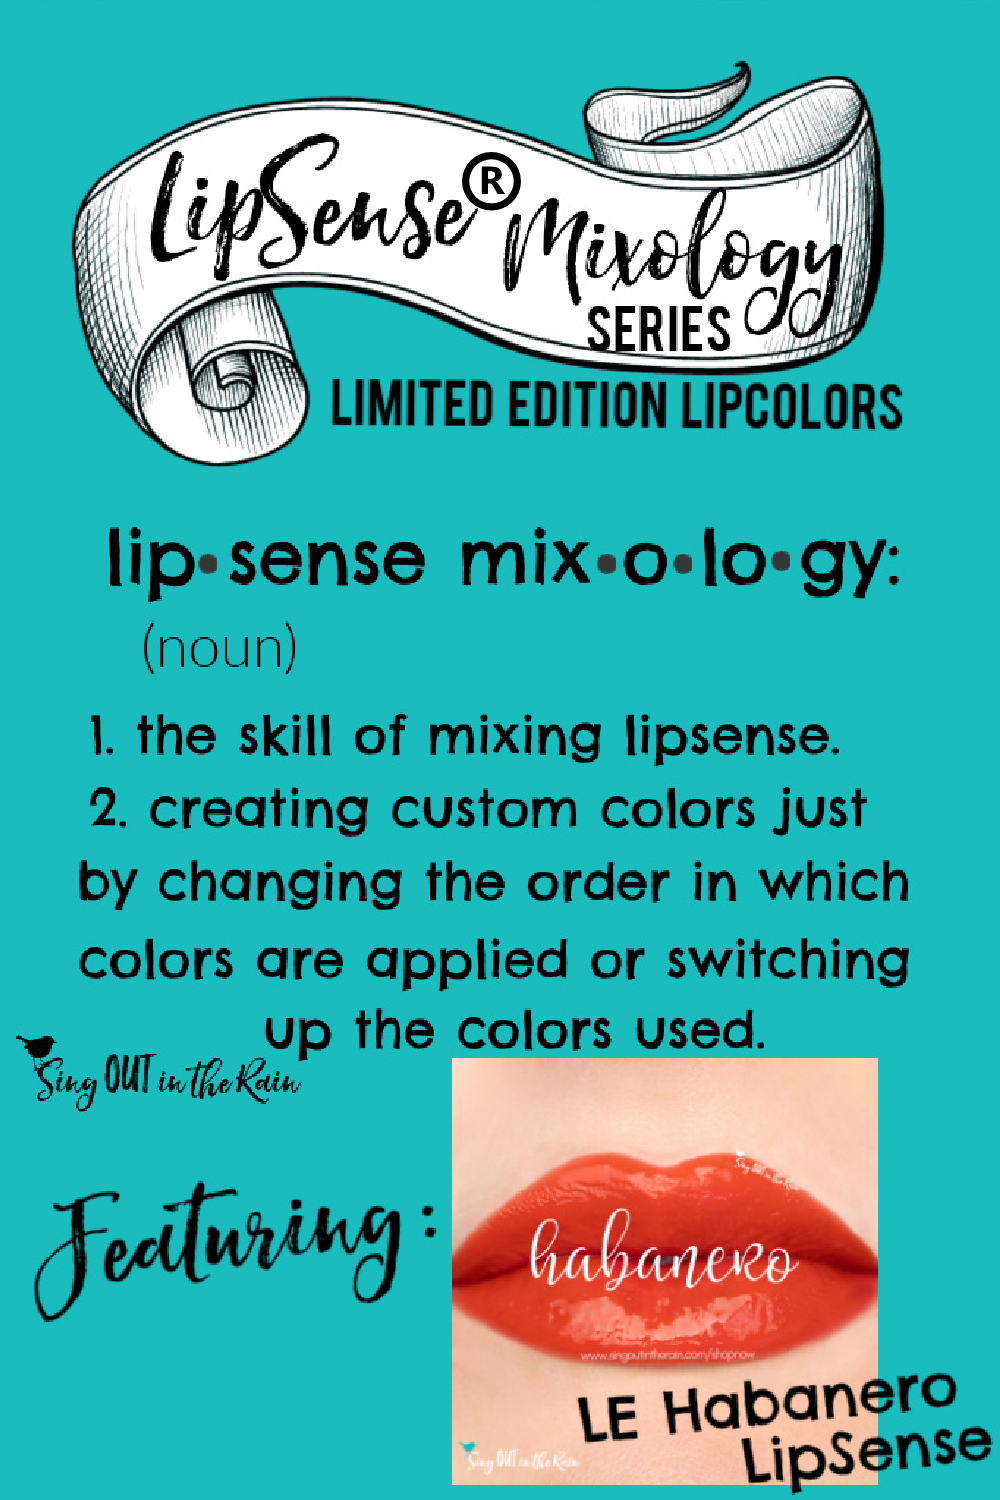 The Ultimate Guide to Habanero LipSense Mixology